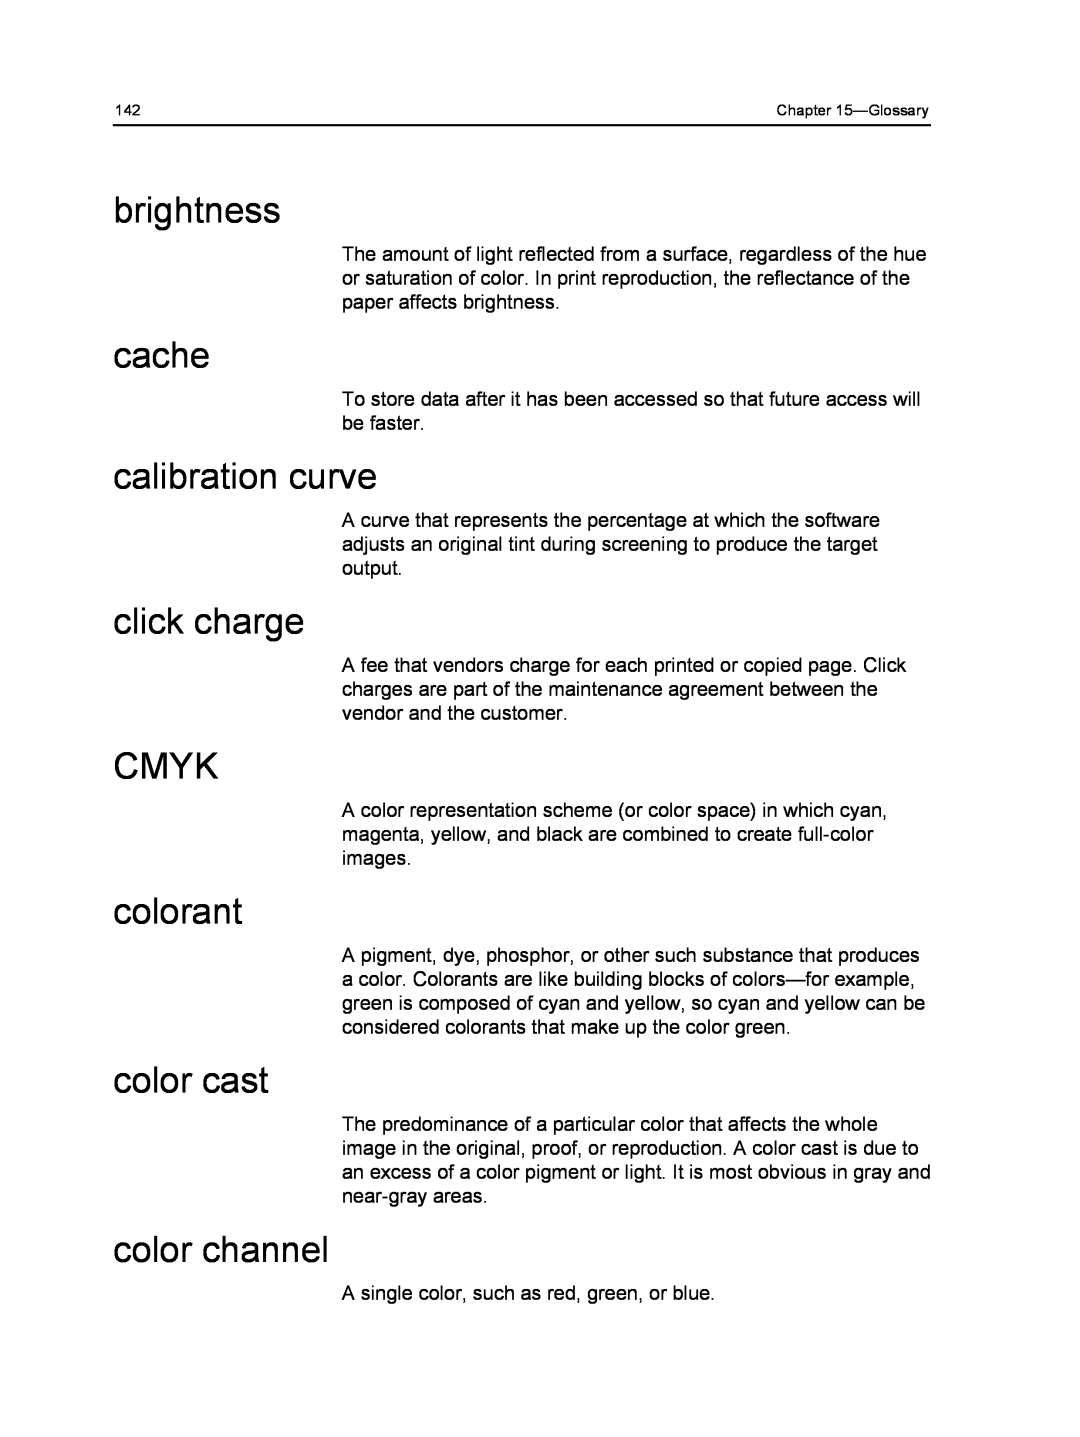 Xerox 560, 550 manual brightness, cache, calibration curve, click charge, Cmyk, colorant, color cast, color channel 